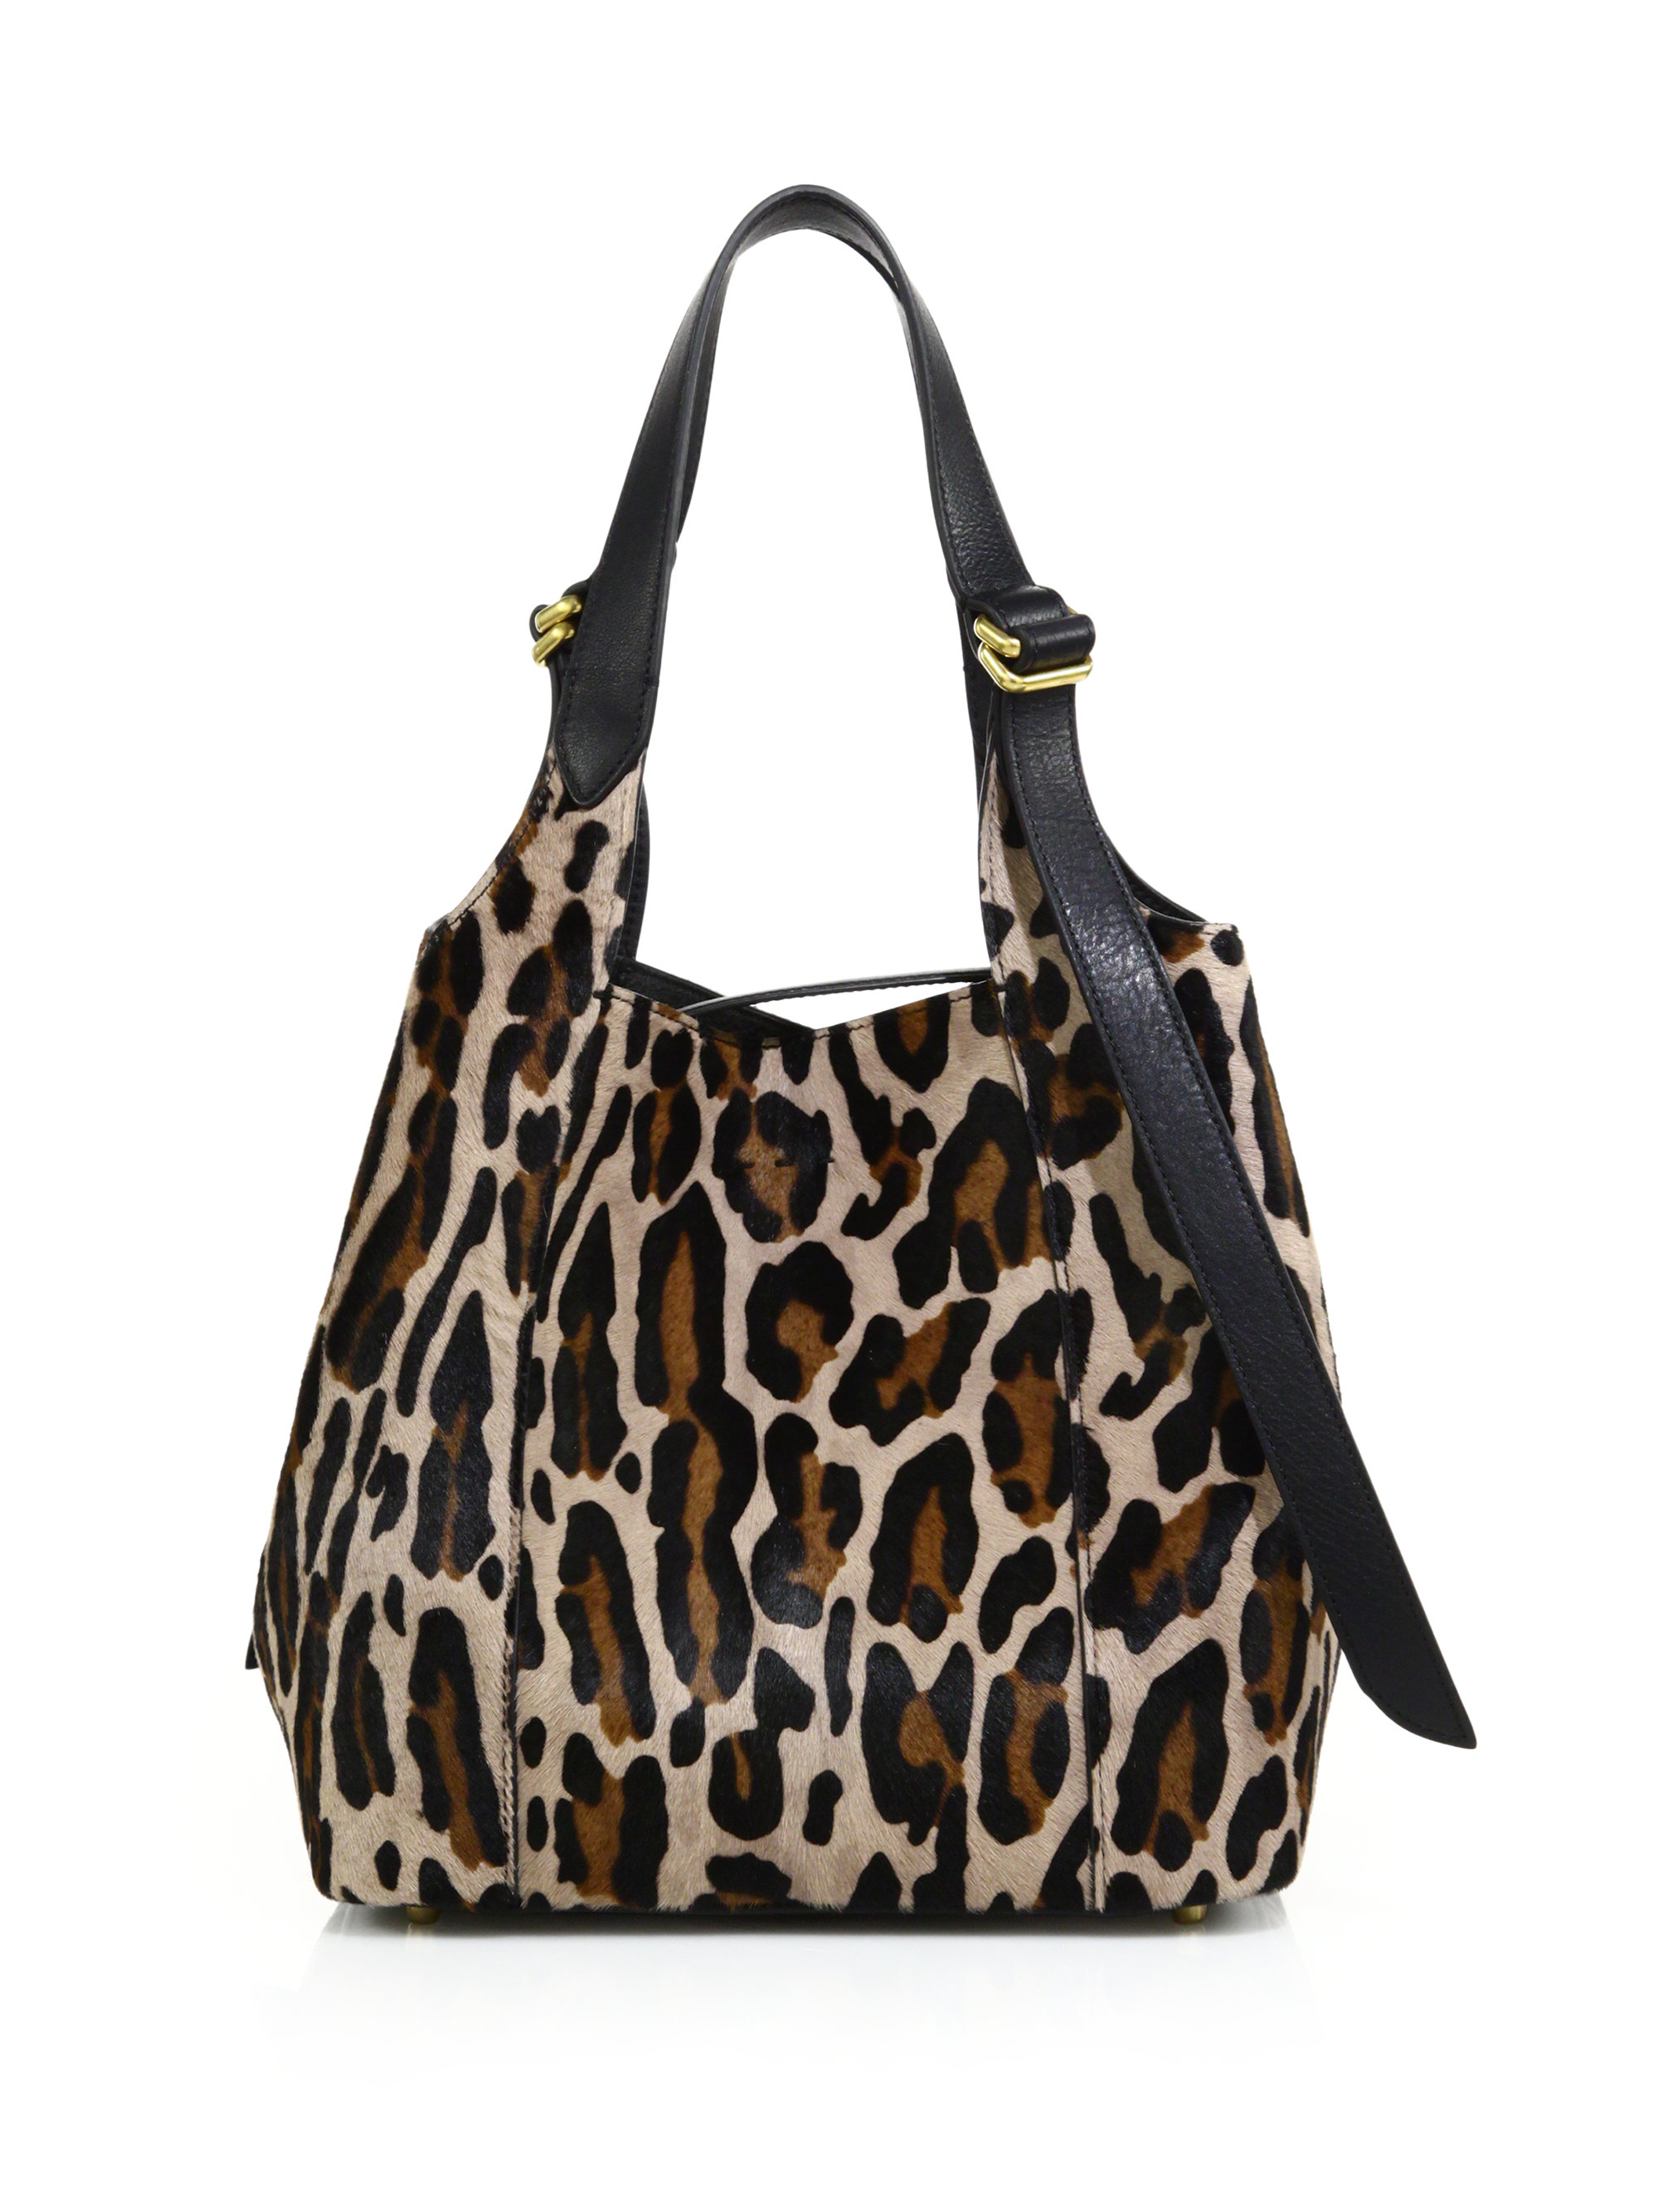 Lyst - Nina ricci Faust Small Leopard-Print Calf Hair Shoulder Bag